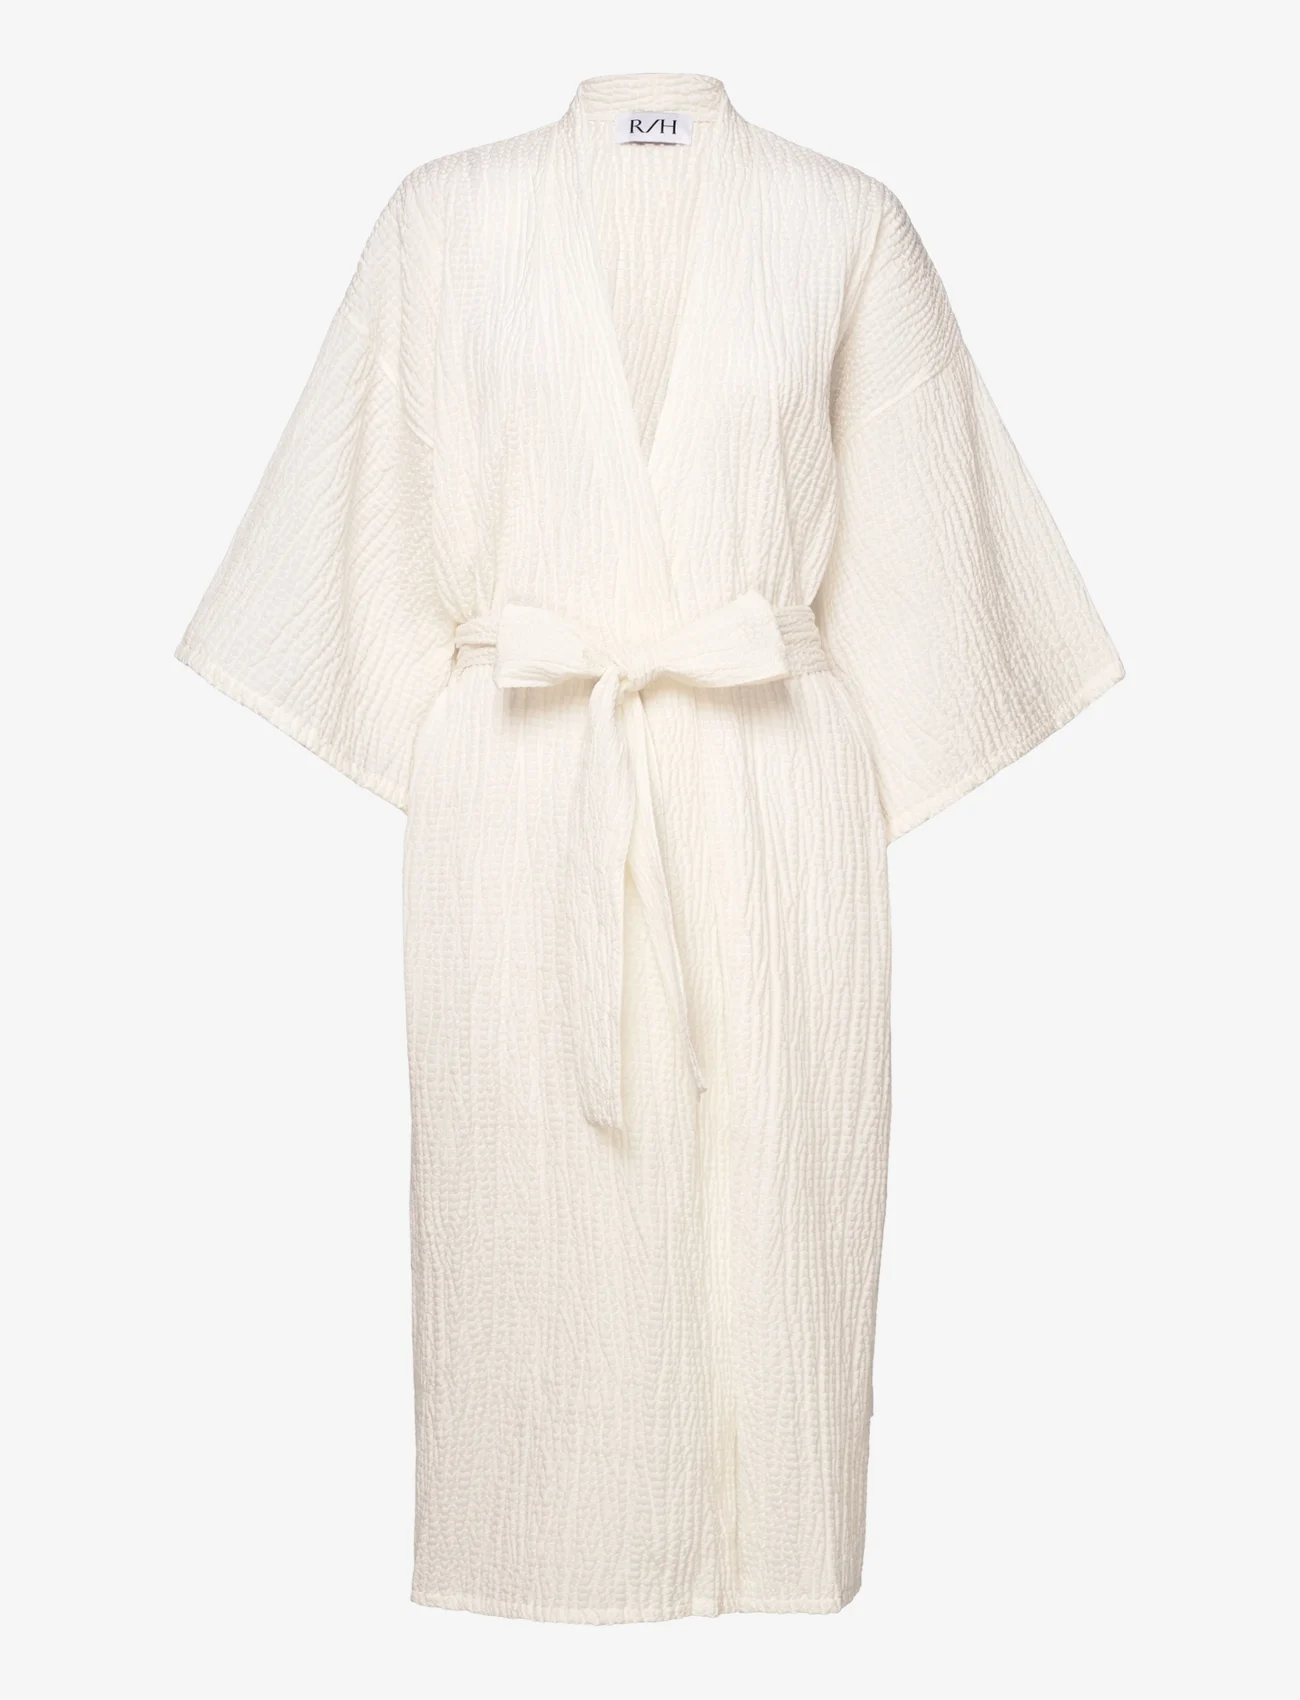 R/H Studio - SHANGRI DRESS - omlottklänning - solid white - 0